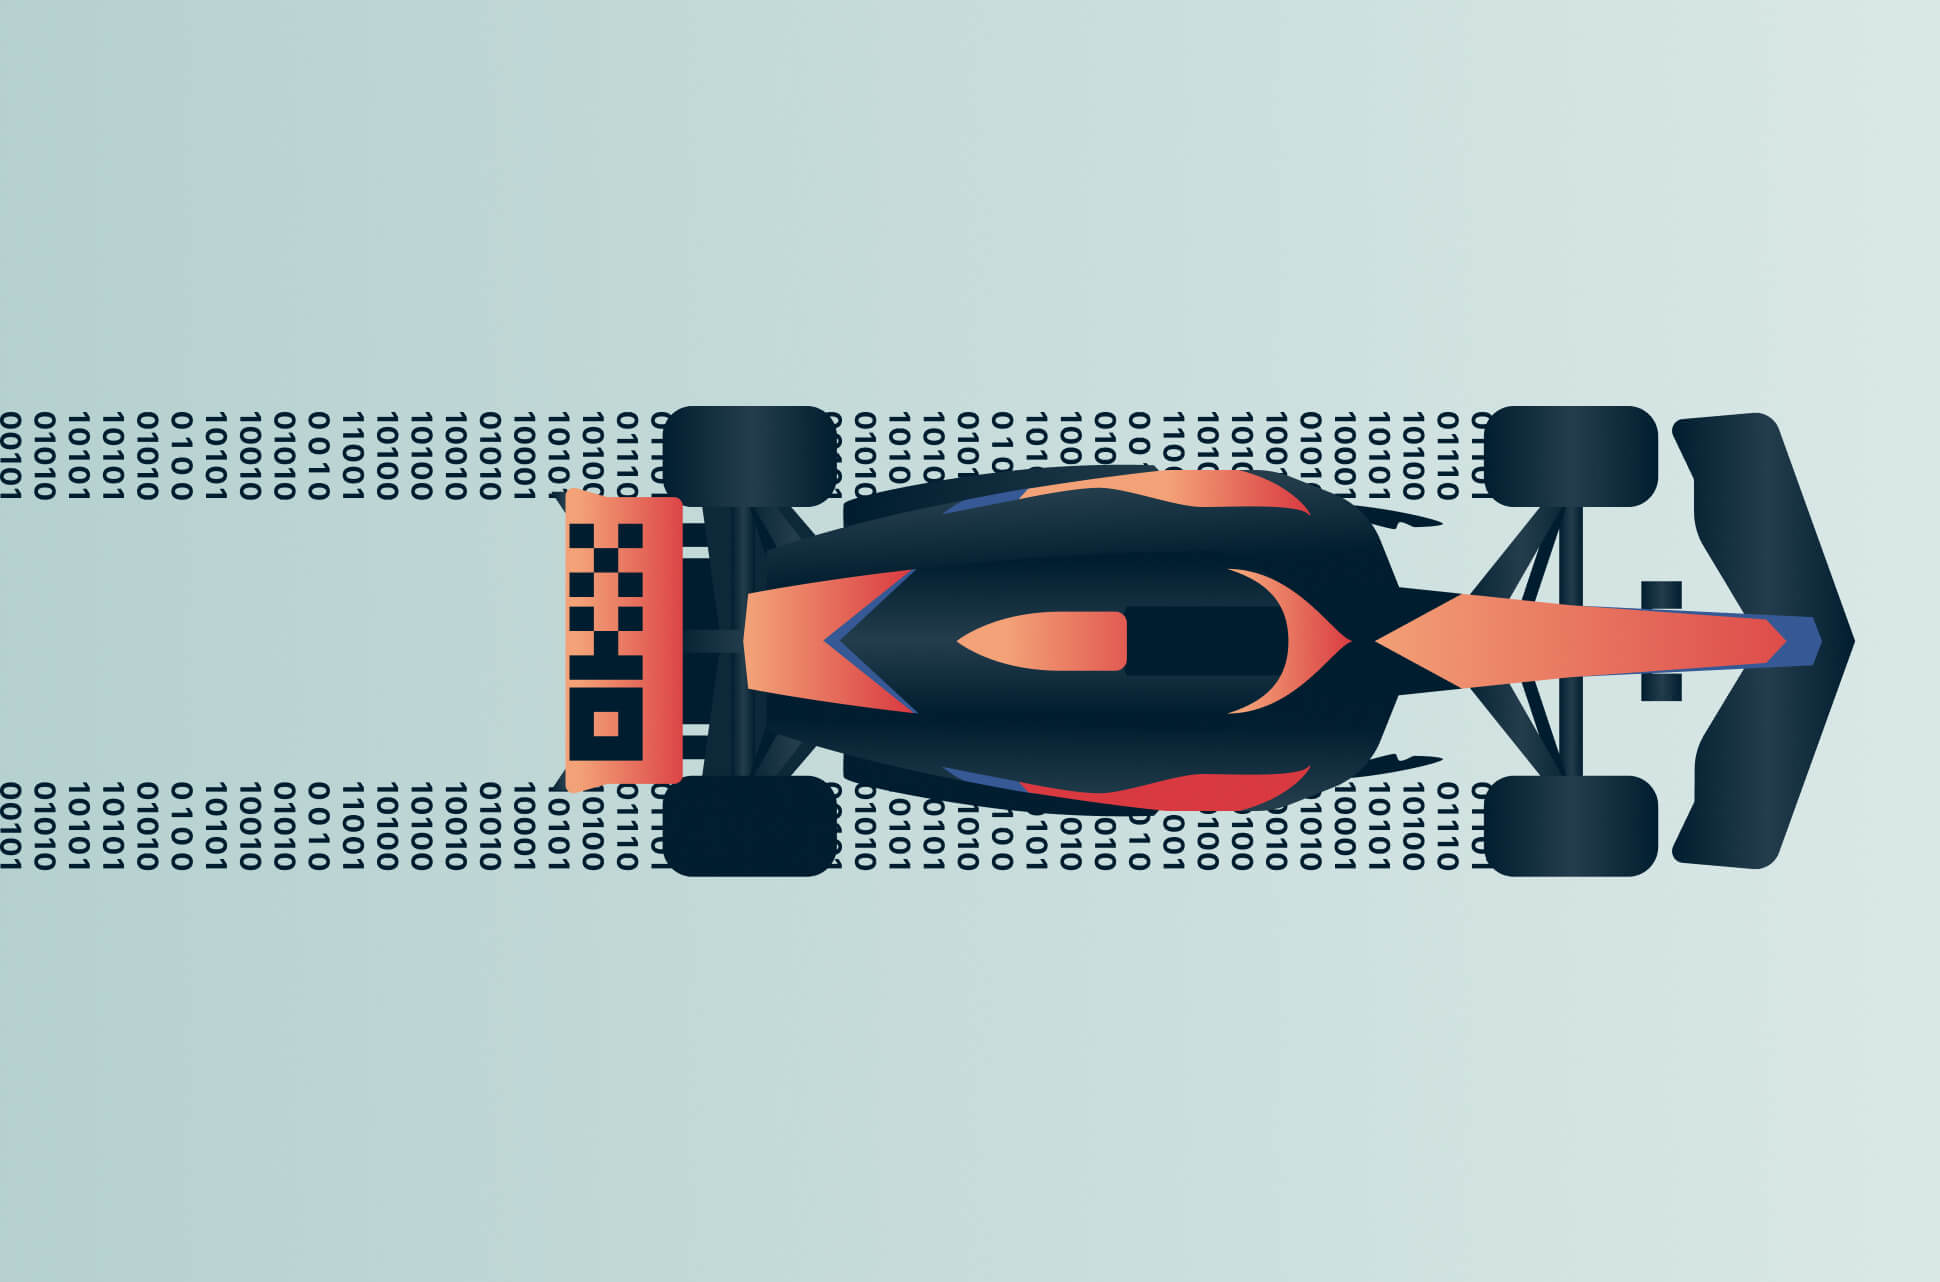 McLaren launch image trickery points to its 2024 F1 car secrets